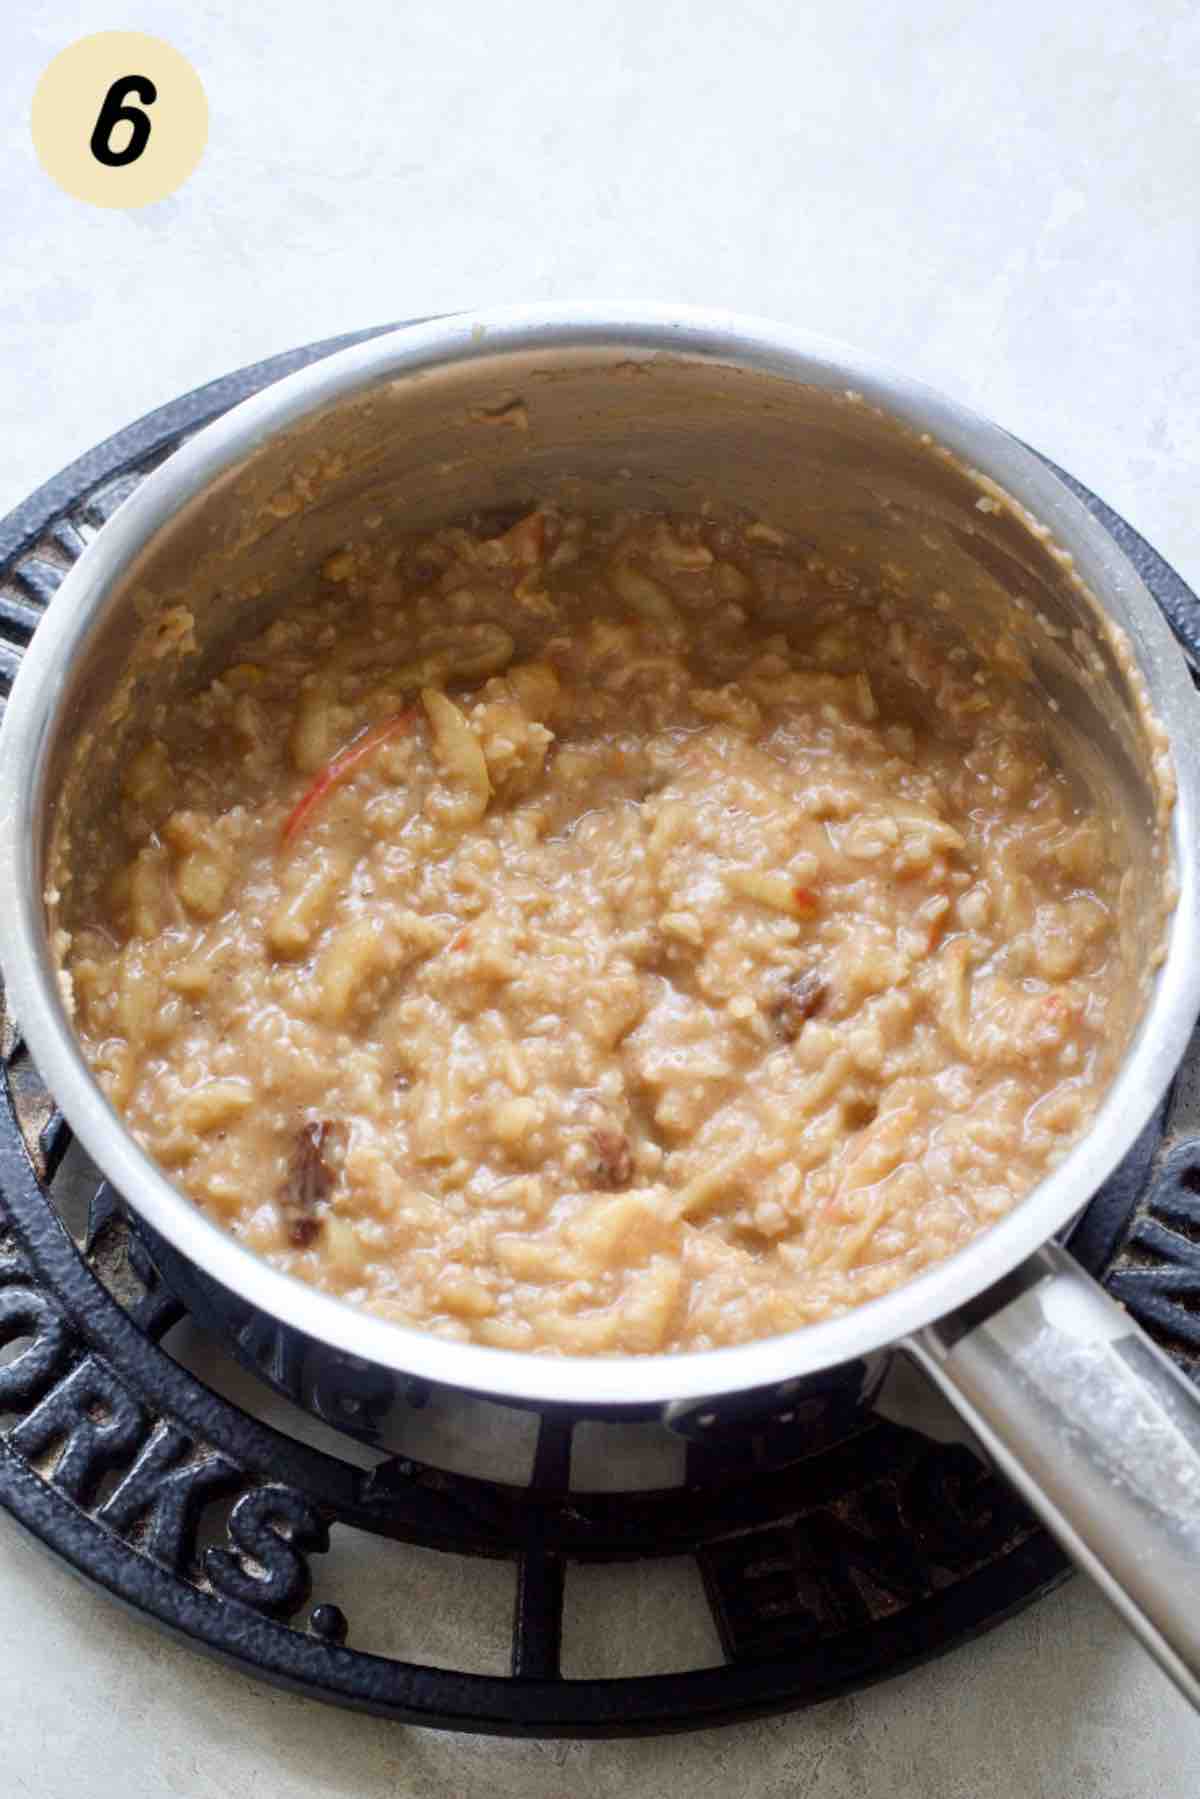 Cooked porridge in a pan.